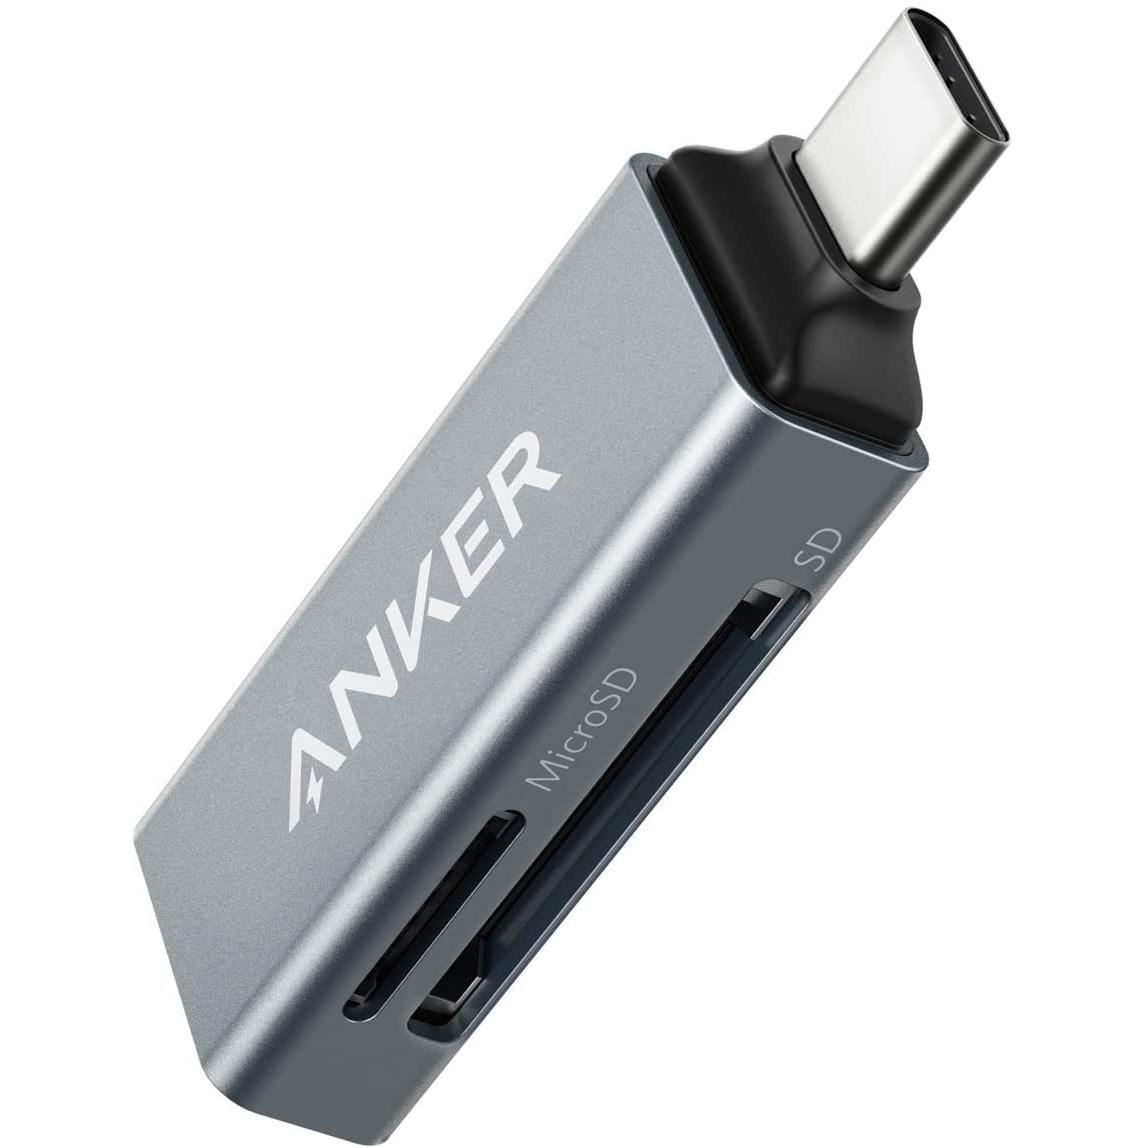 Anker 2-in-1 USB Type-C Memory Card Reader for $8.99